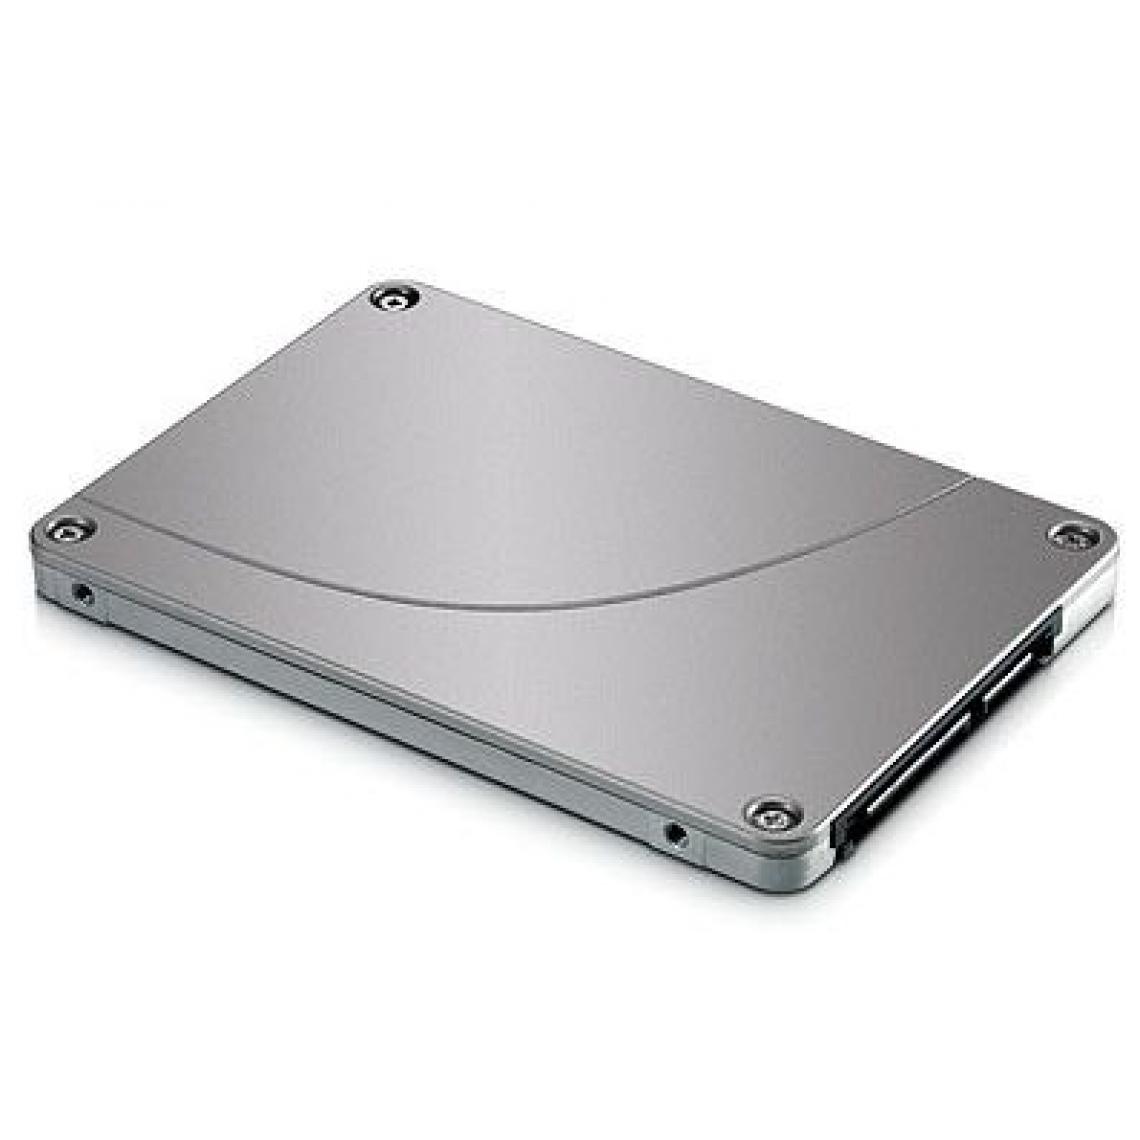 Inconnu - Hewlett Packard Enterprise 120GB SATA III - Disque Dur interne